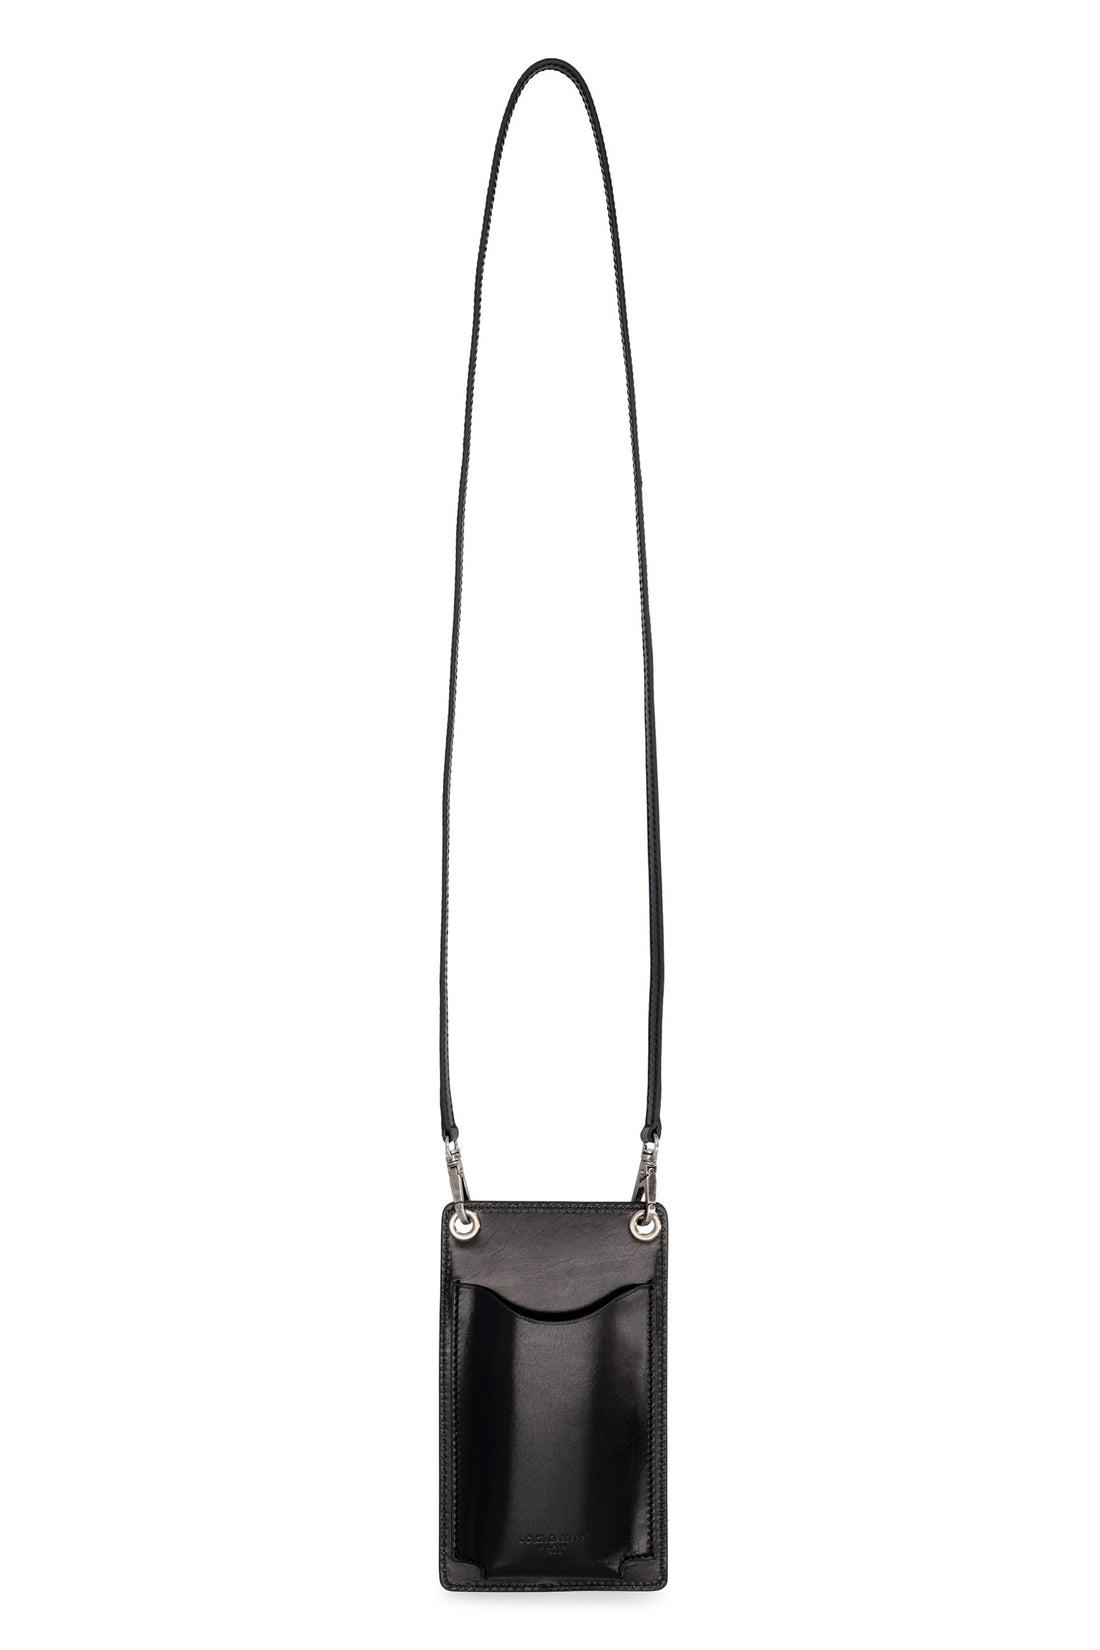 Dolce & Gabbana-OUTLET-SALE-Leather phone-bag-ARCHIVIST